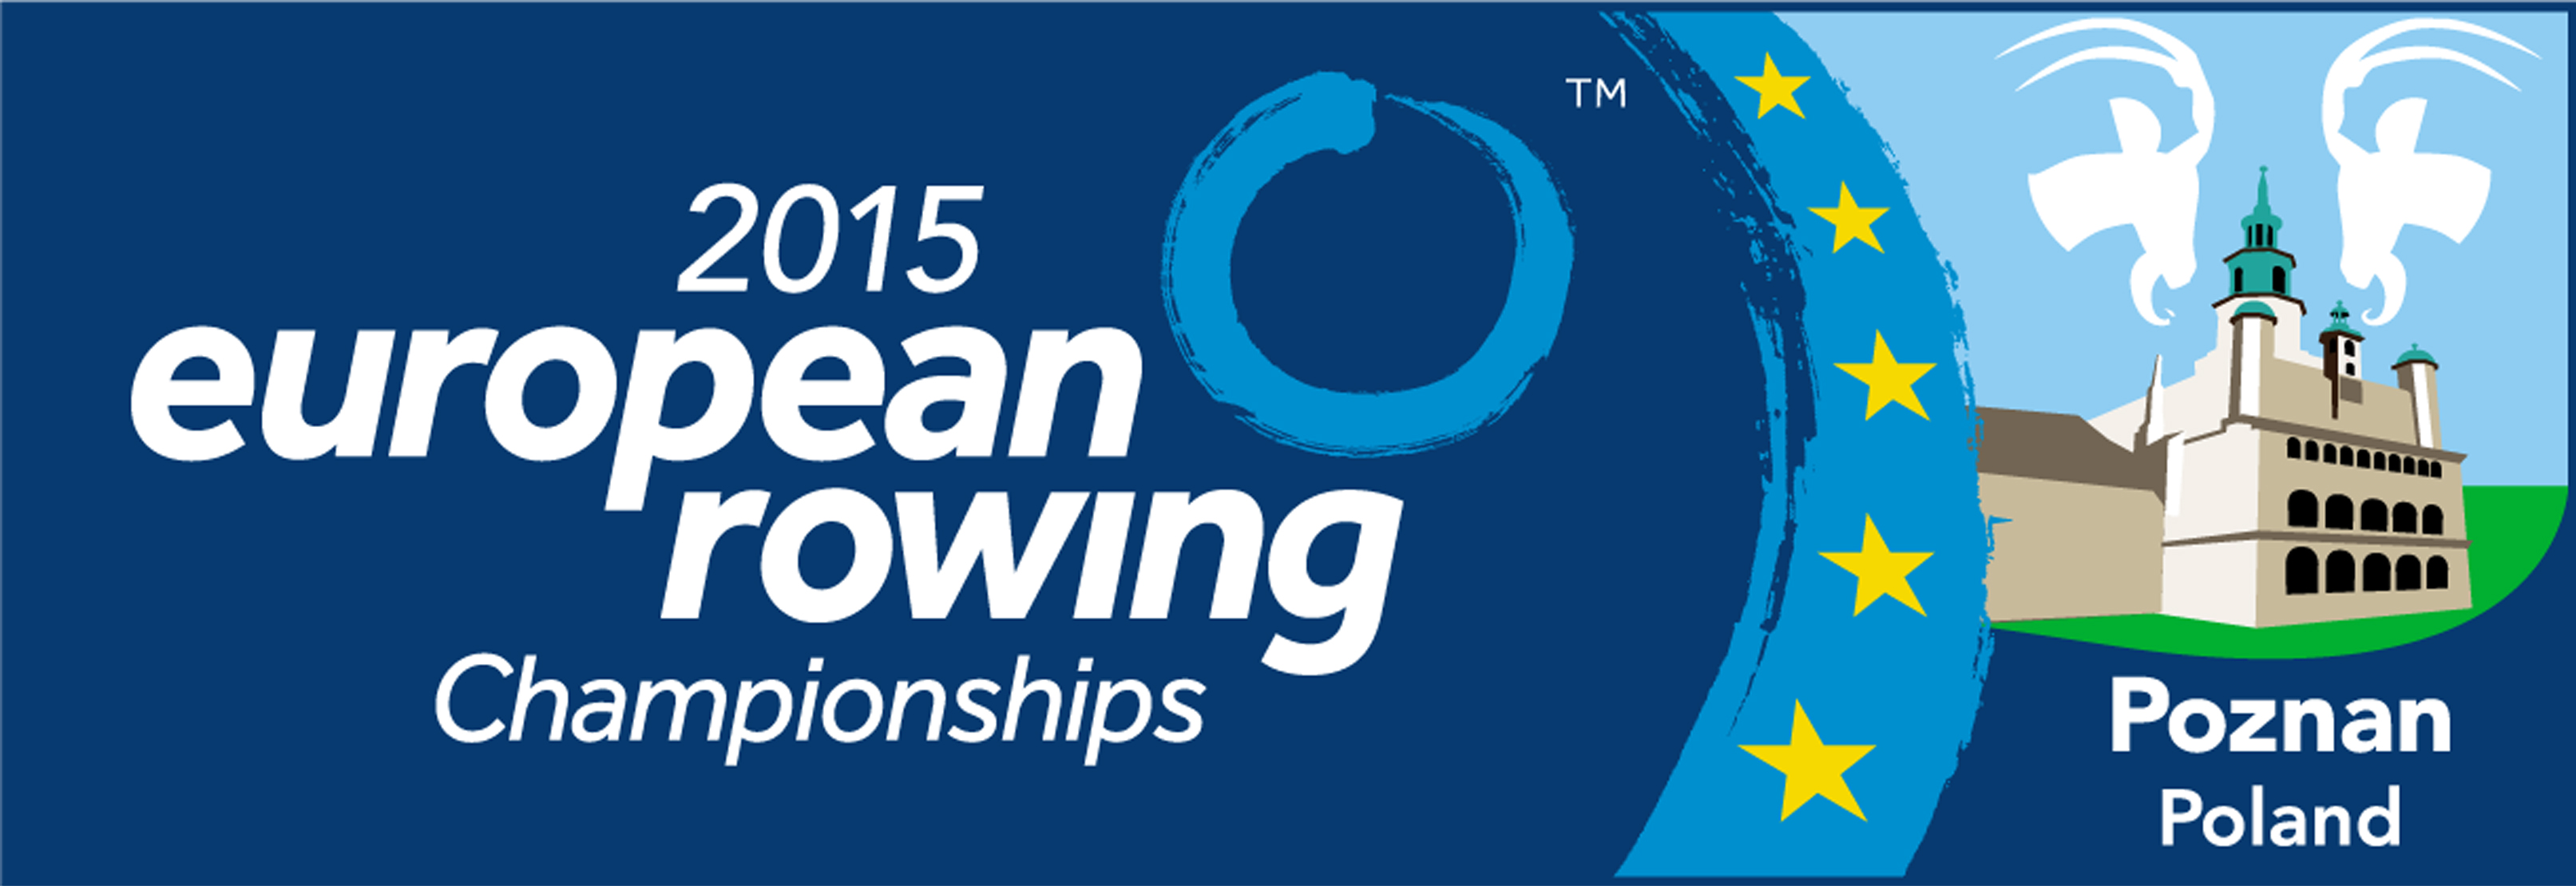 FISA 2015 - European Rowing Championships Poznan (POL)